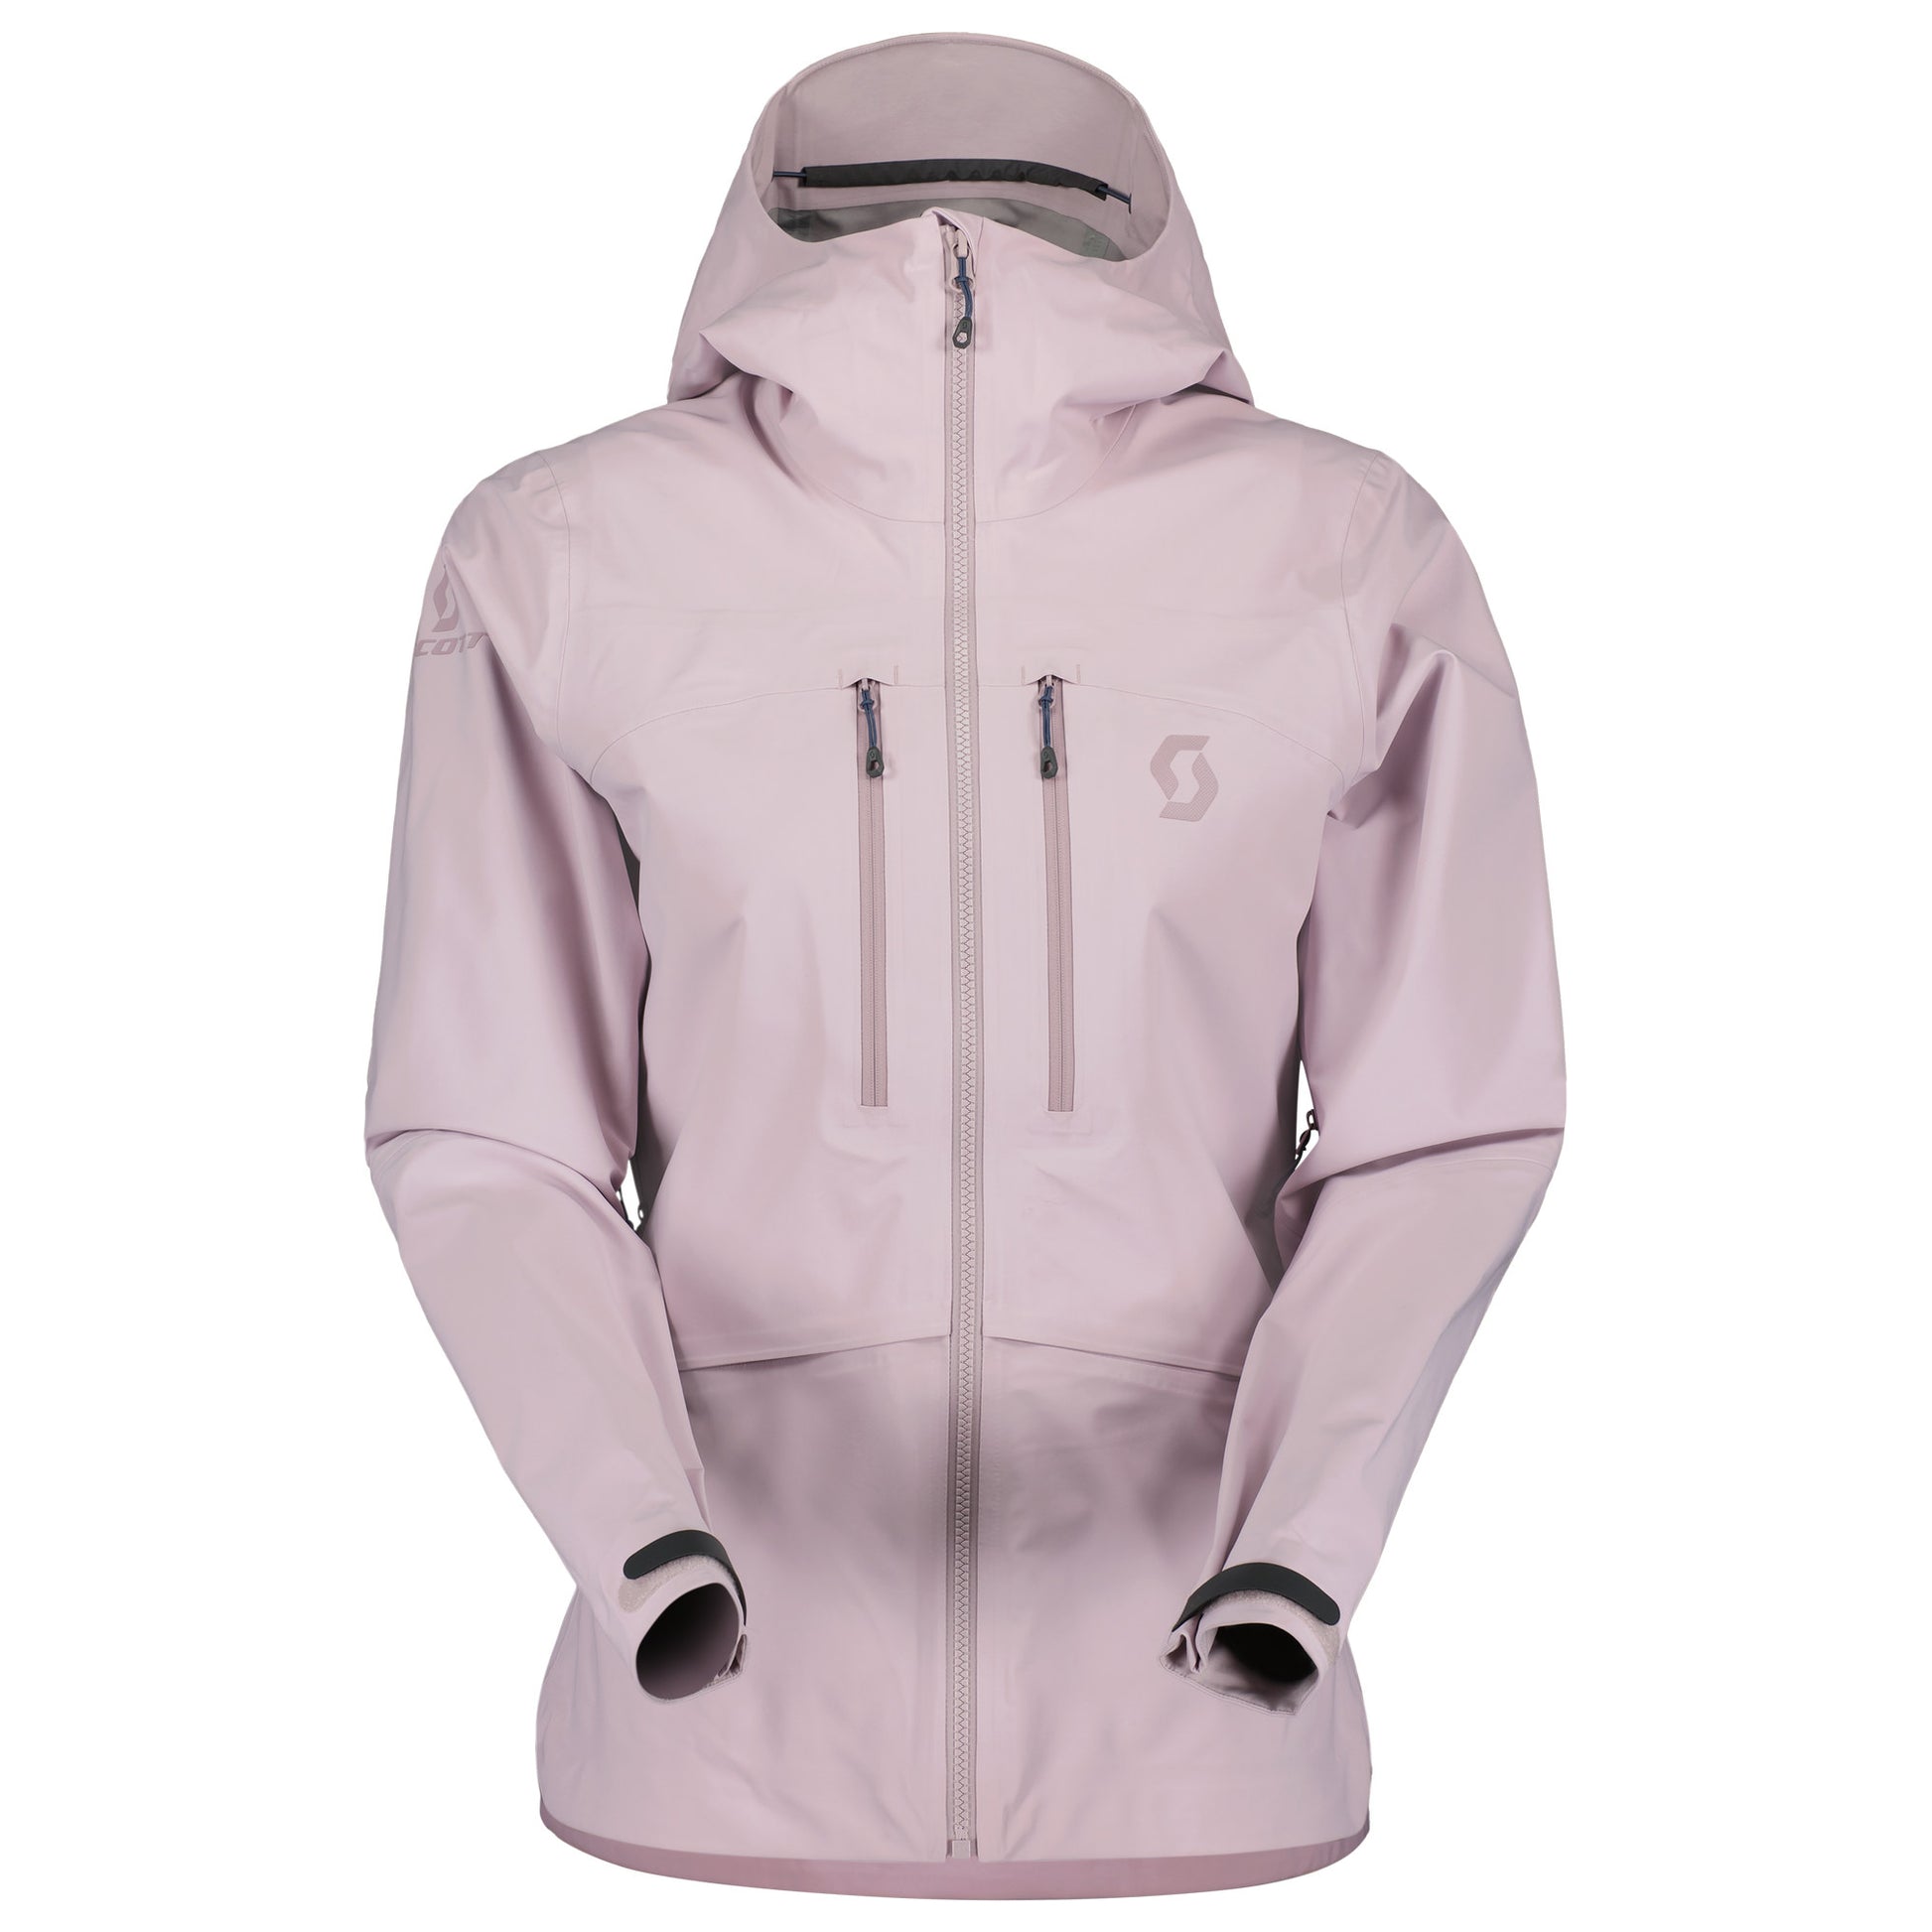 Scott Women's Explorair DryoSpun 3L Jacket Sweet Pink Snow Jackets